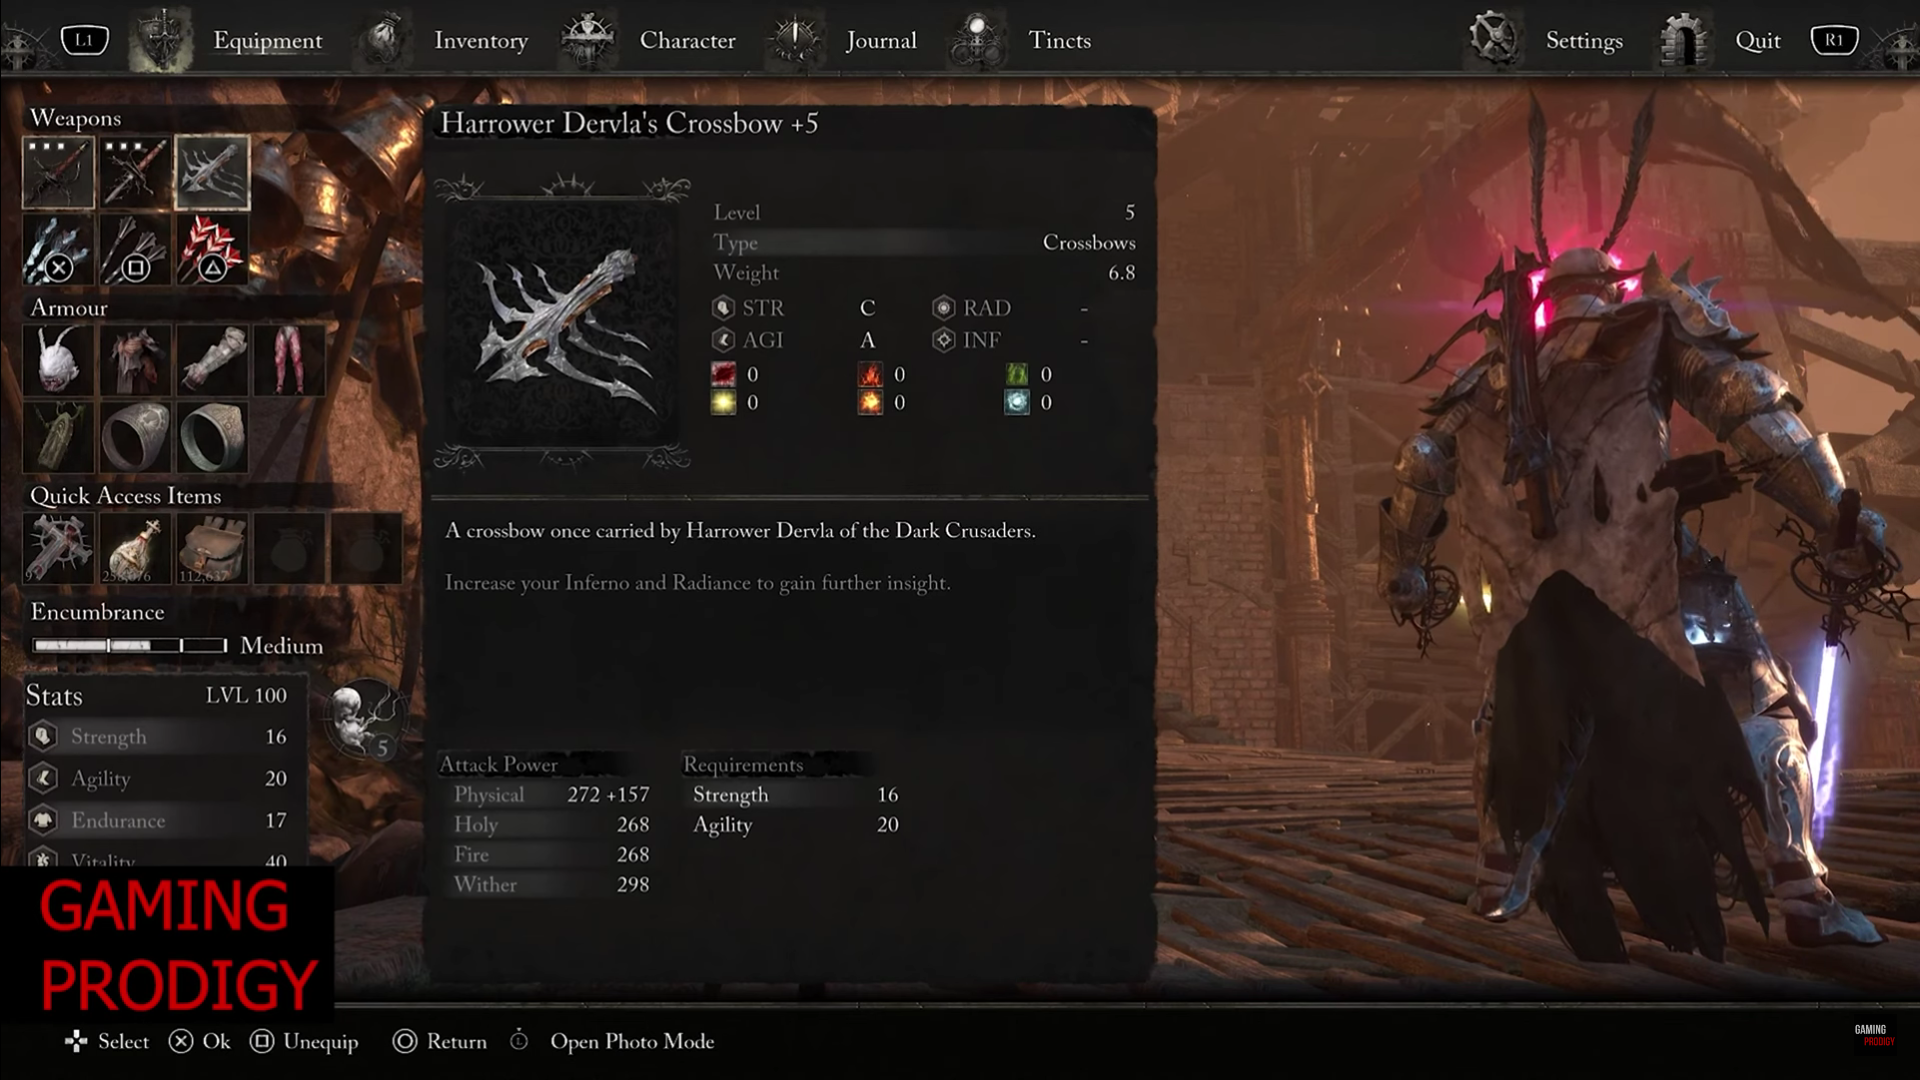 A screenshot of the Harrower Dervla's Crossbow in Lords of the Fallen.